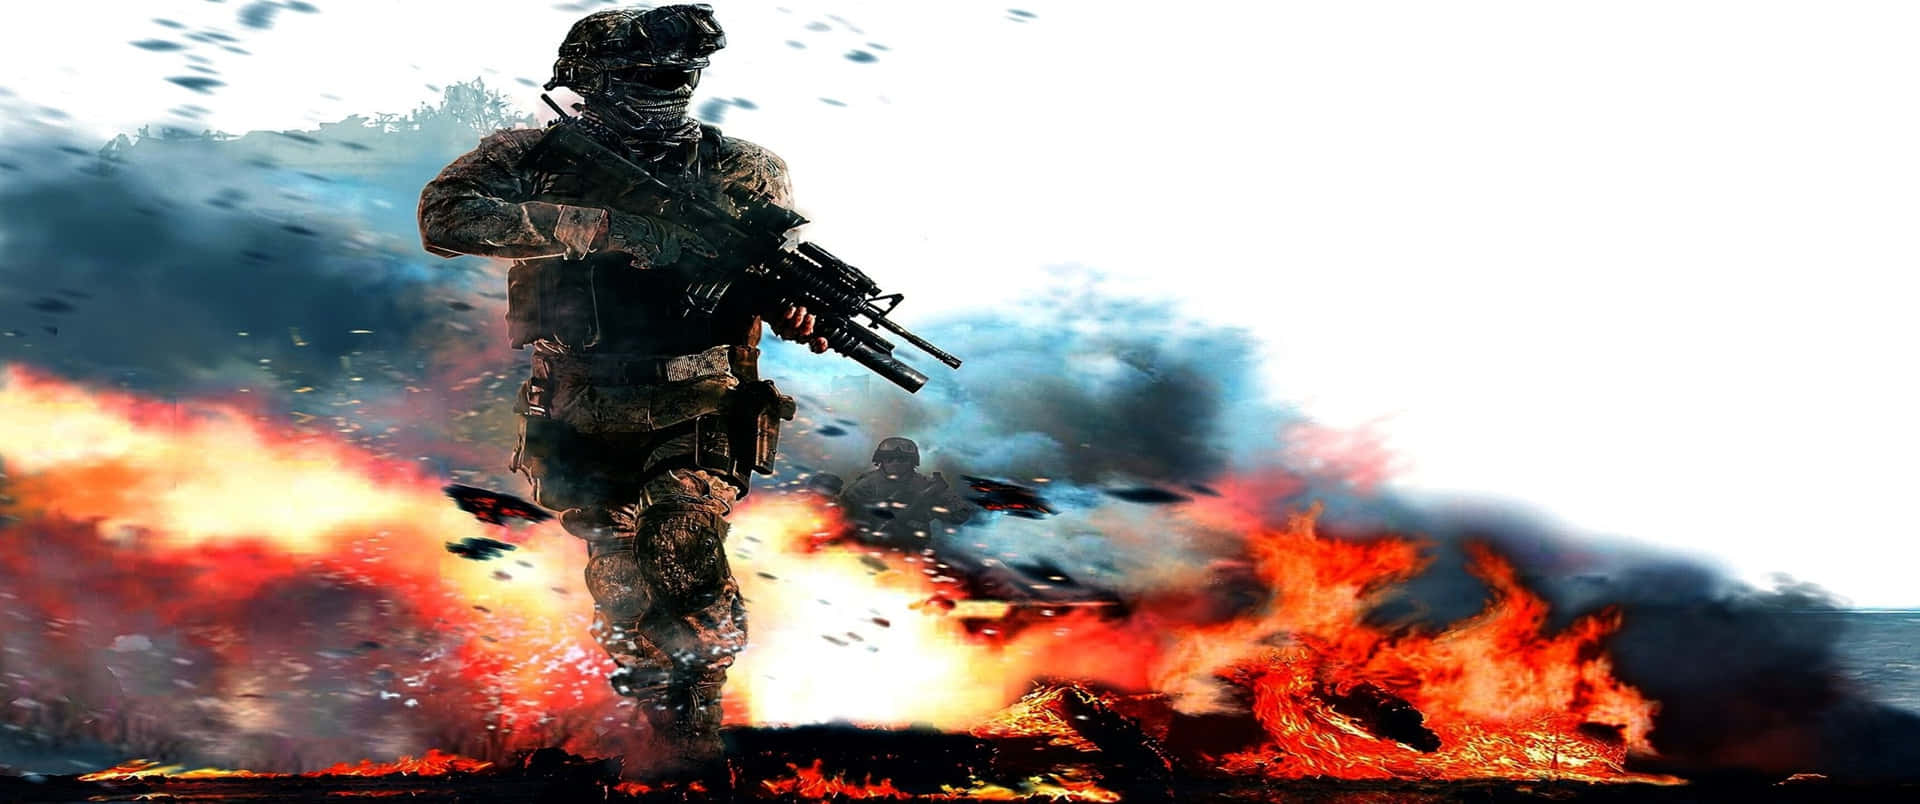 Rökignaturvy I 3440x1440p Call Of Duty Modern Warfare Bakgrund.